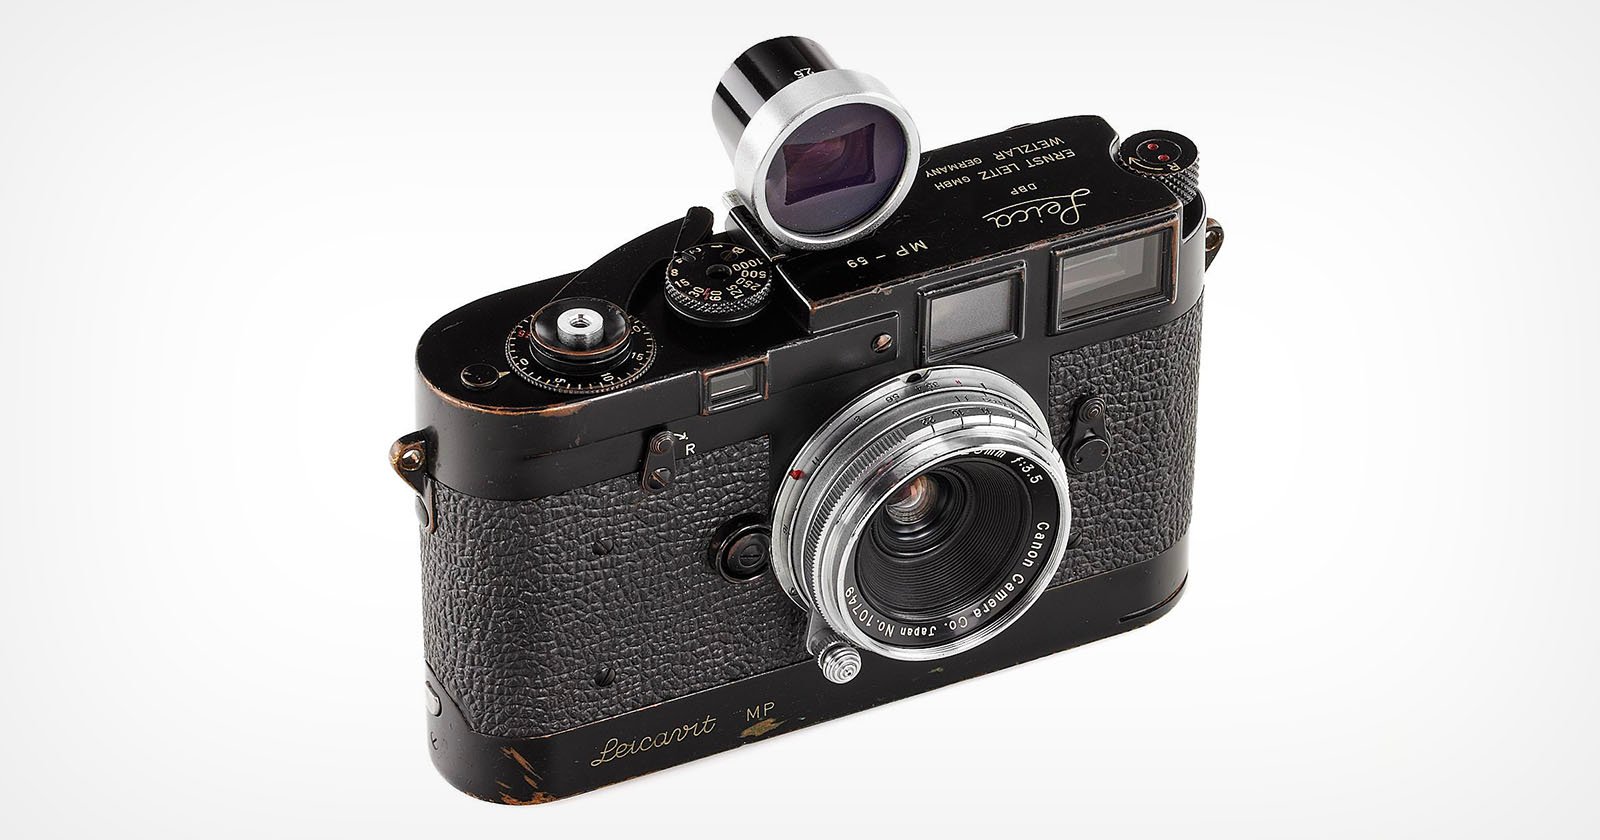 Yul Brynner’s Leica Cameras Headline 43rd Leitz Photographica Auction